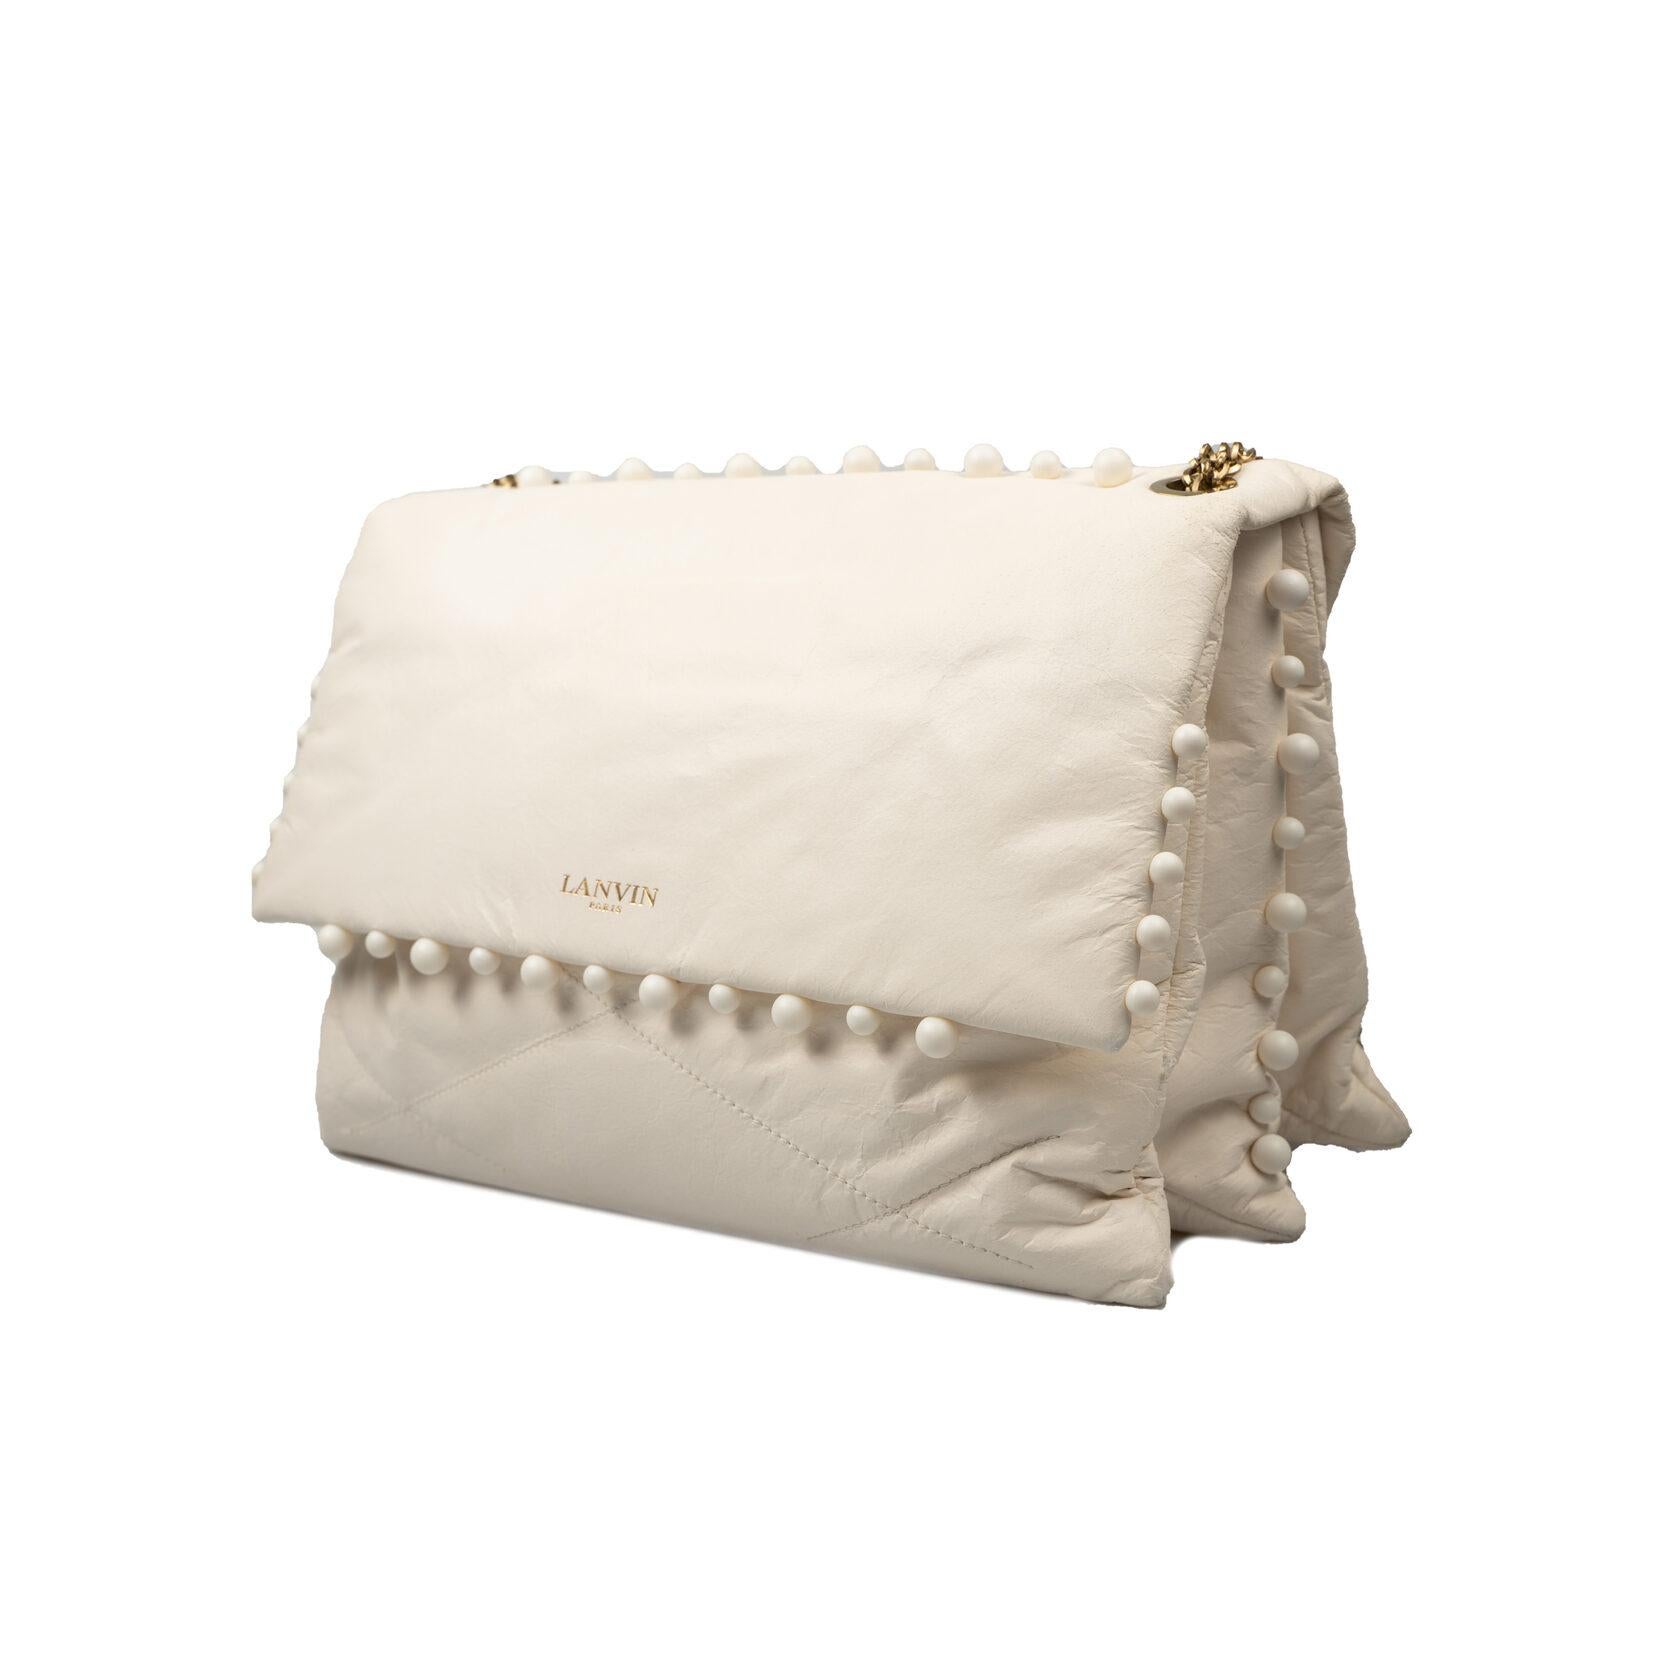 Lanvin Sugar Hand Bag White In Good Condition For Sale In Dover, DE